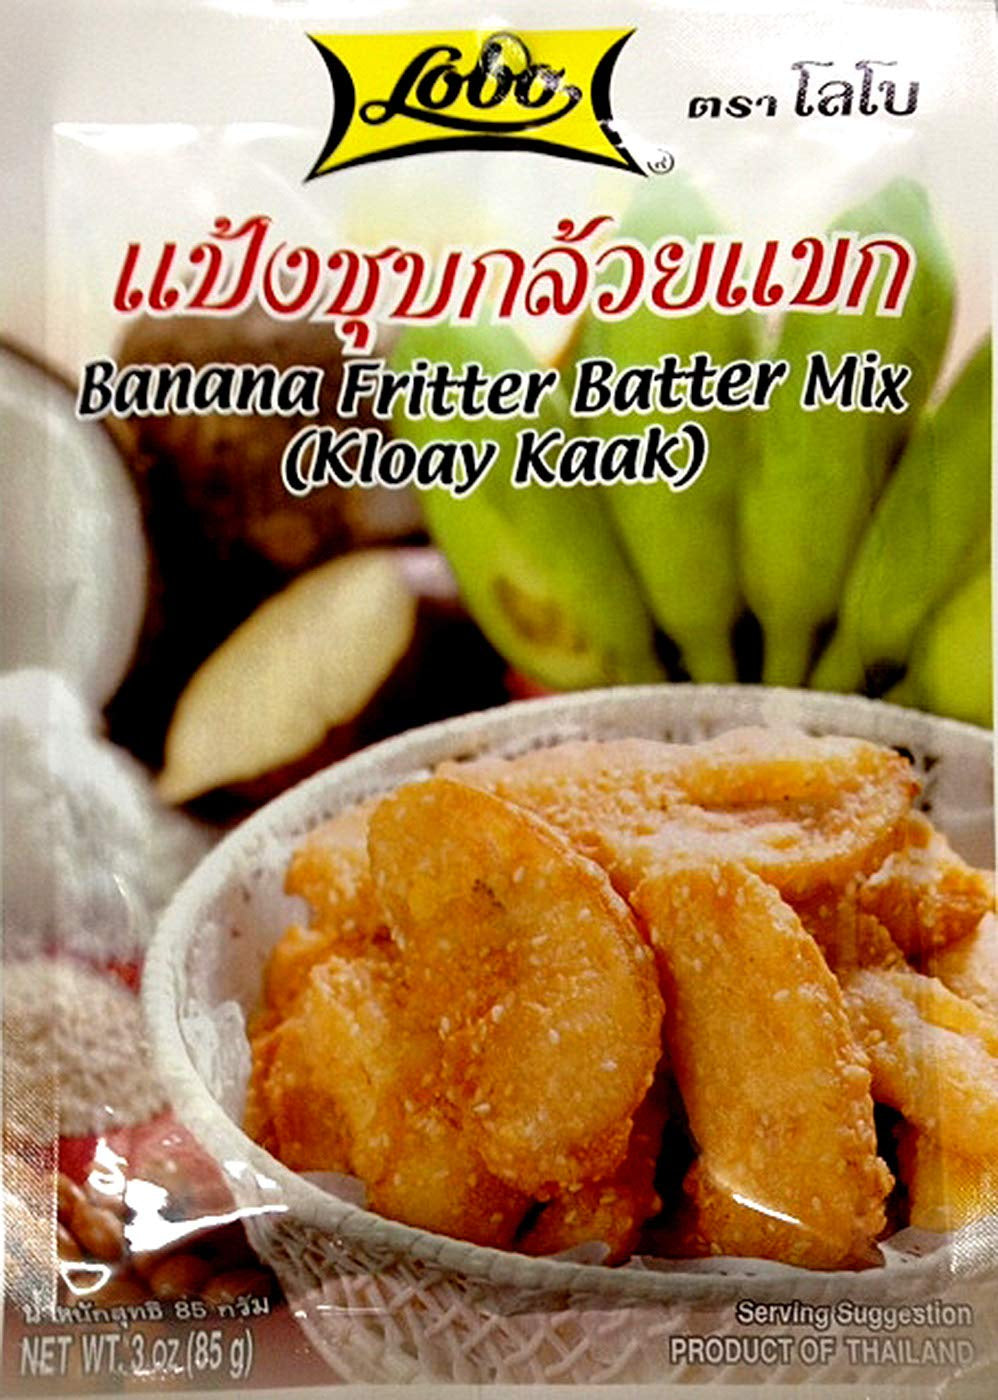 Lobo - Banana Fritter Batter Mix (Kloay Kaak) - แป้งชุปกล้วยแขก โลโบ้